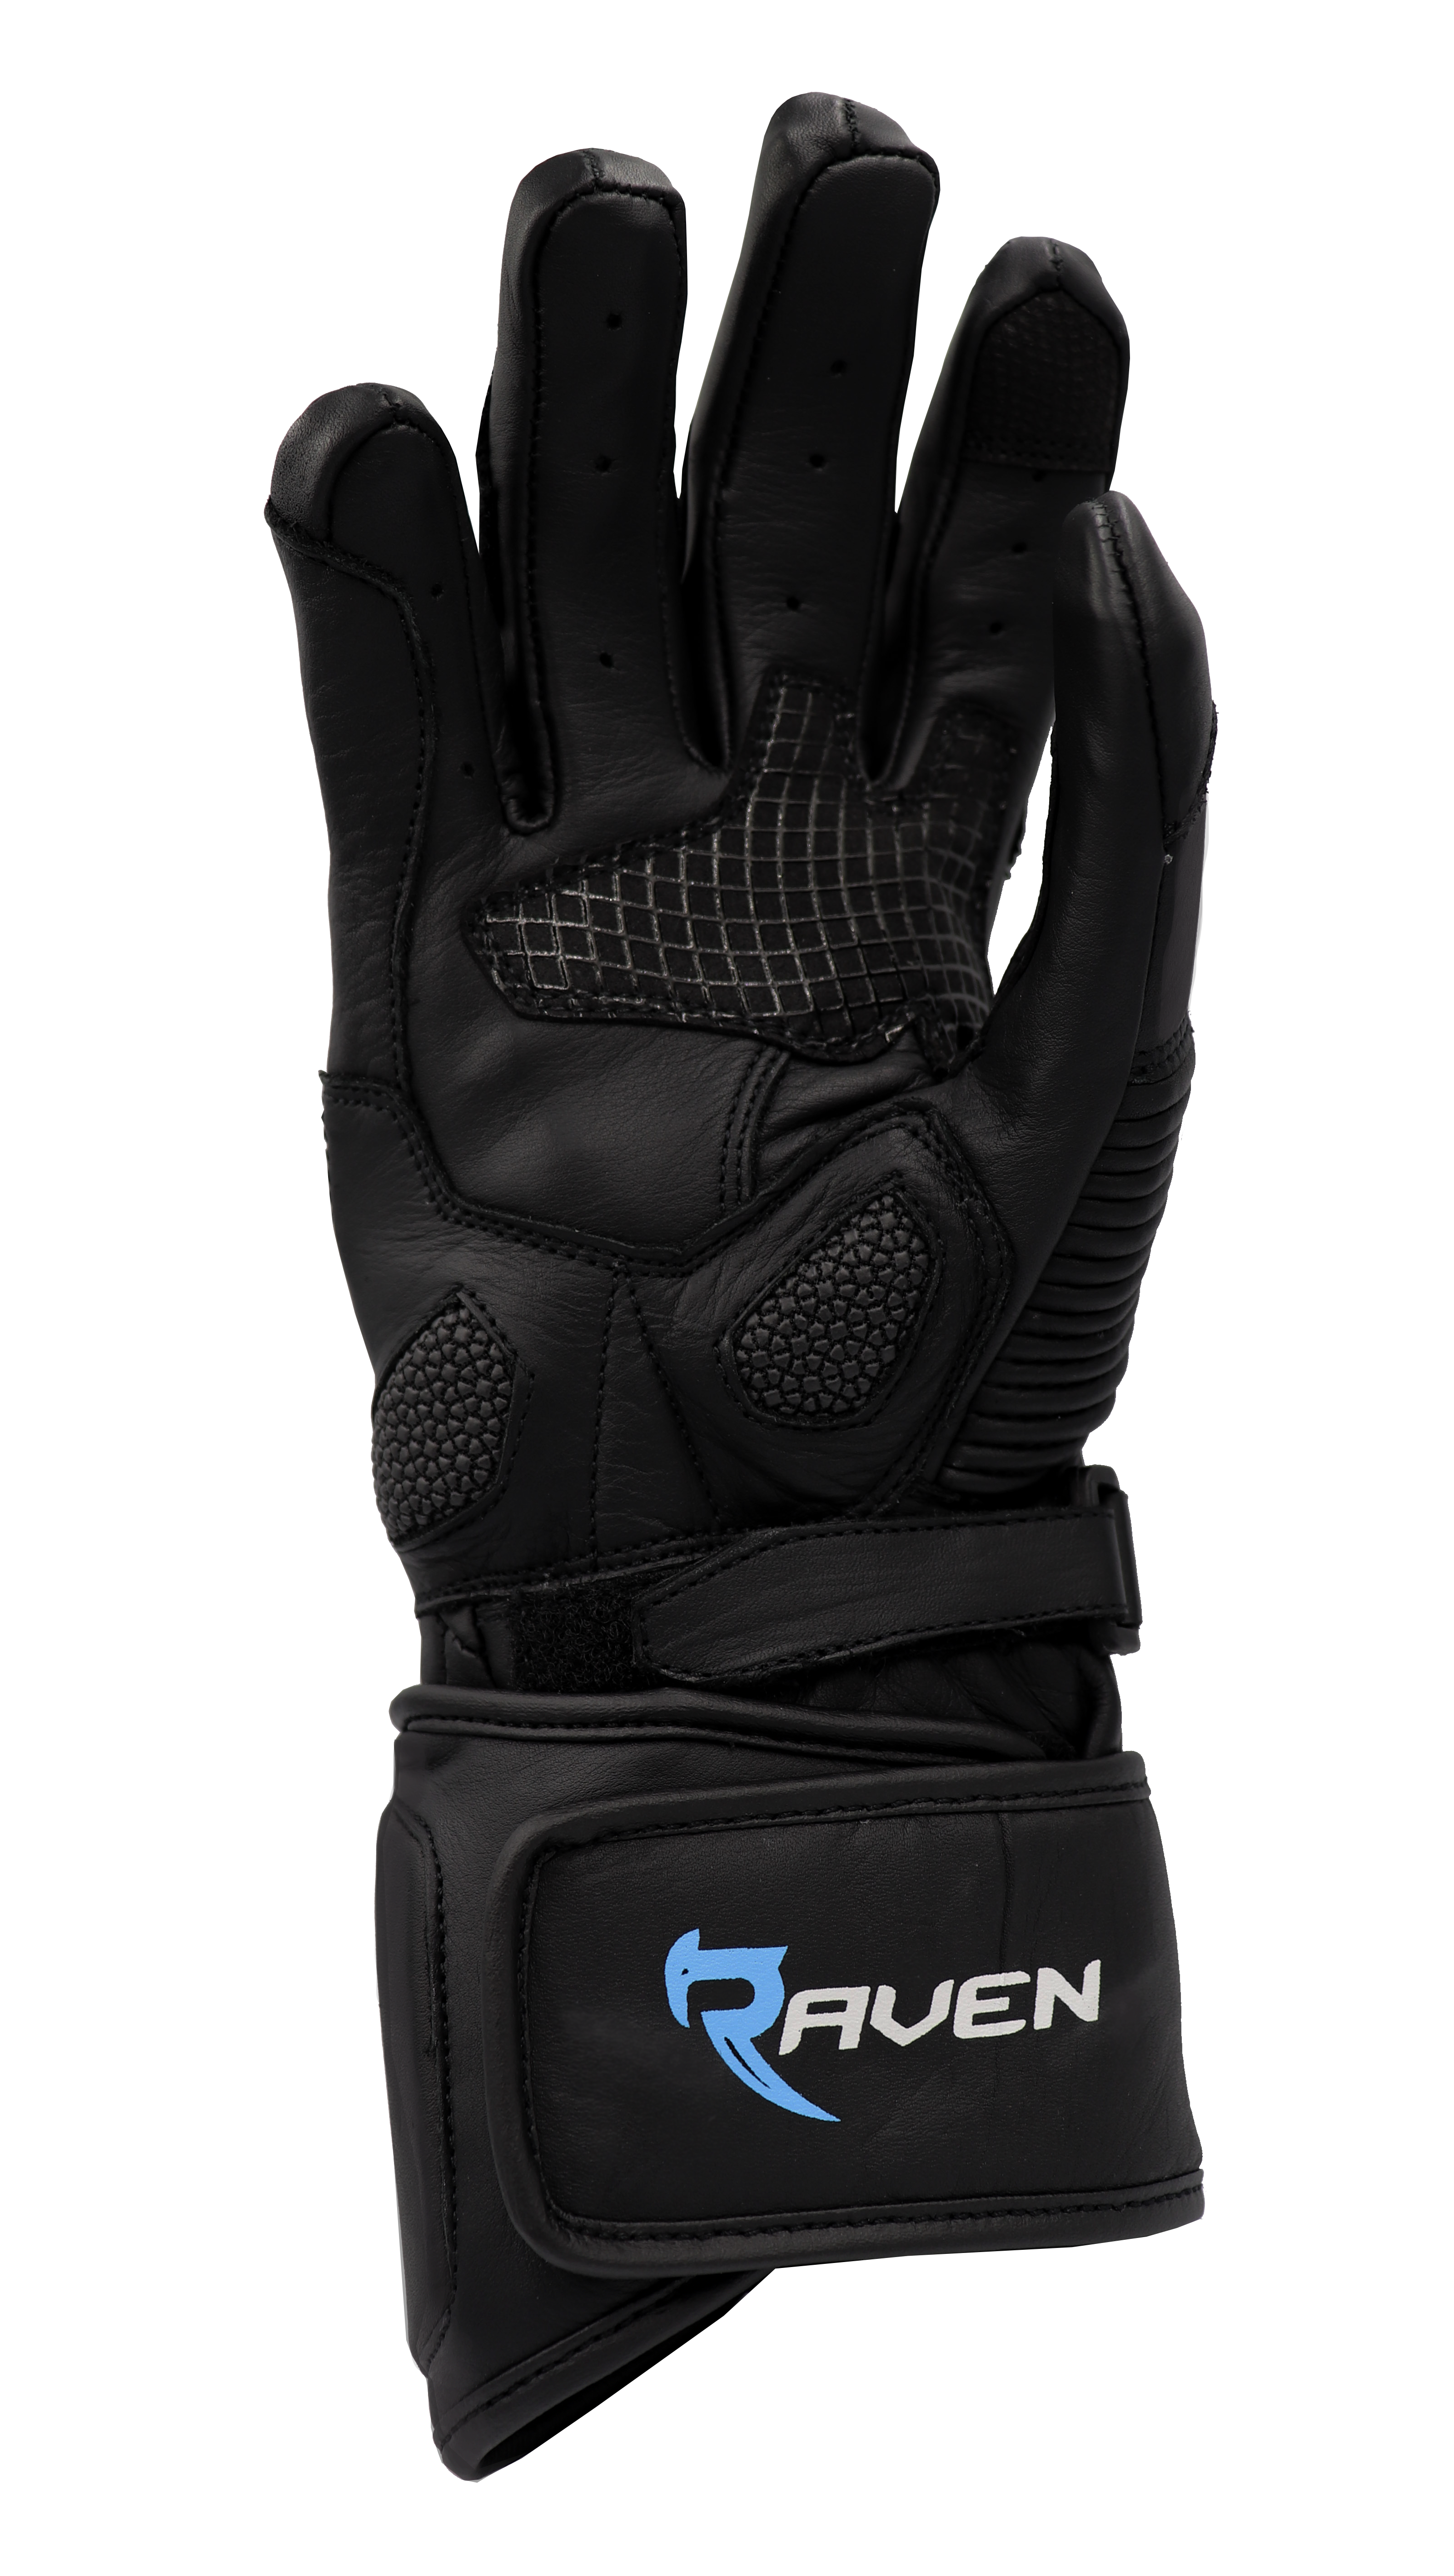 DARK STORM - Black Long Cuff Gauntlet Leather Motorcycle Glove by RAVEN Moto